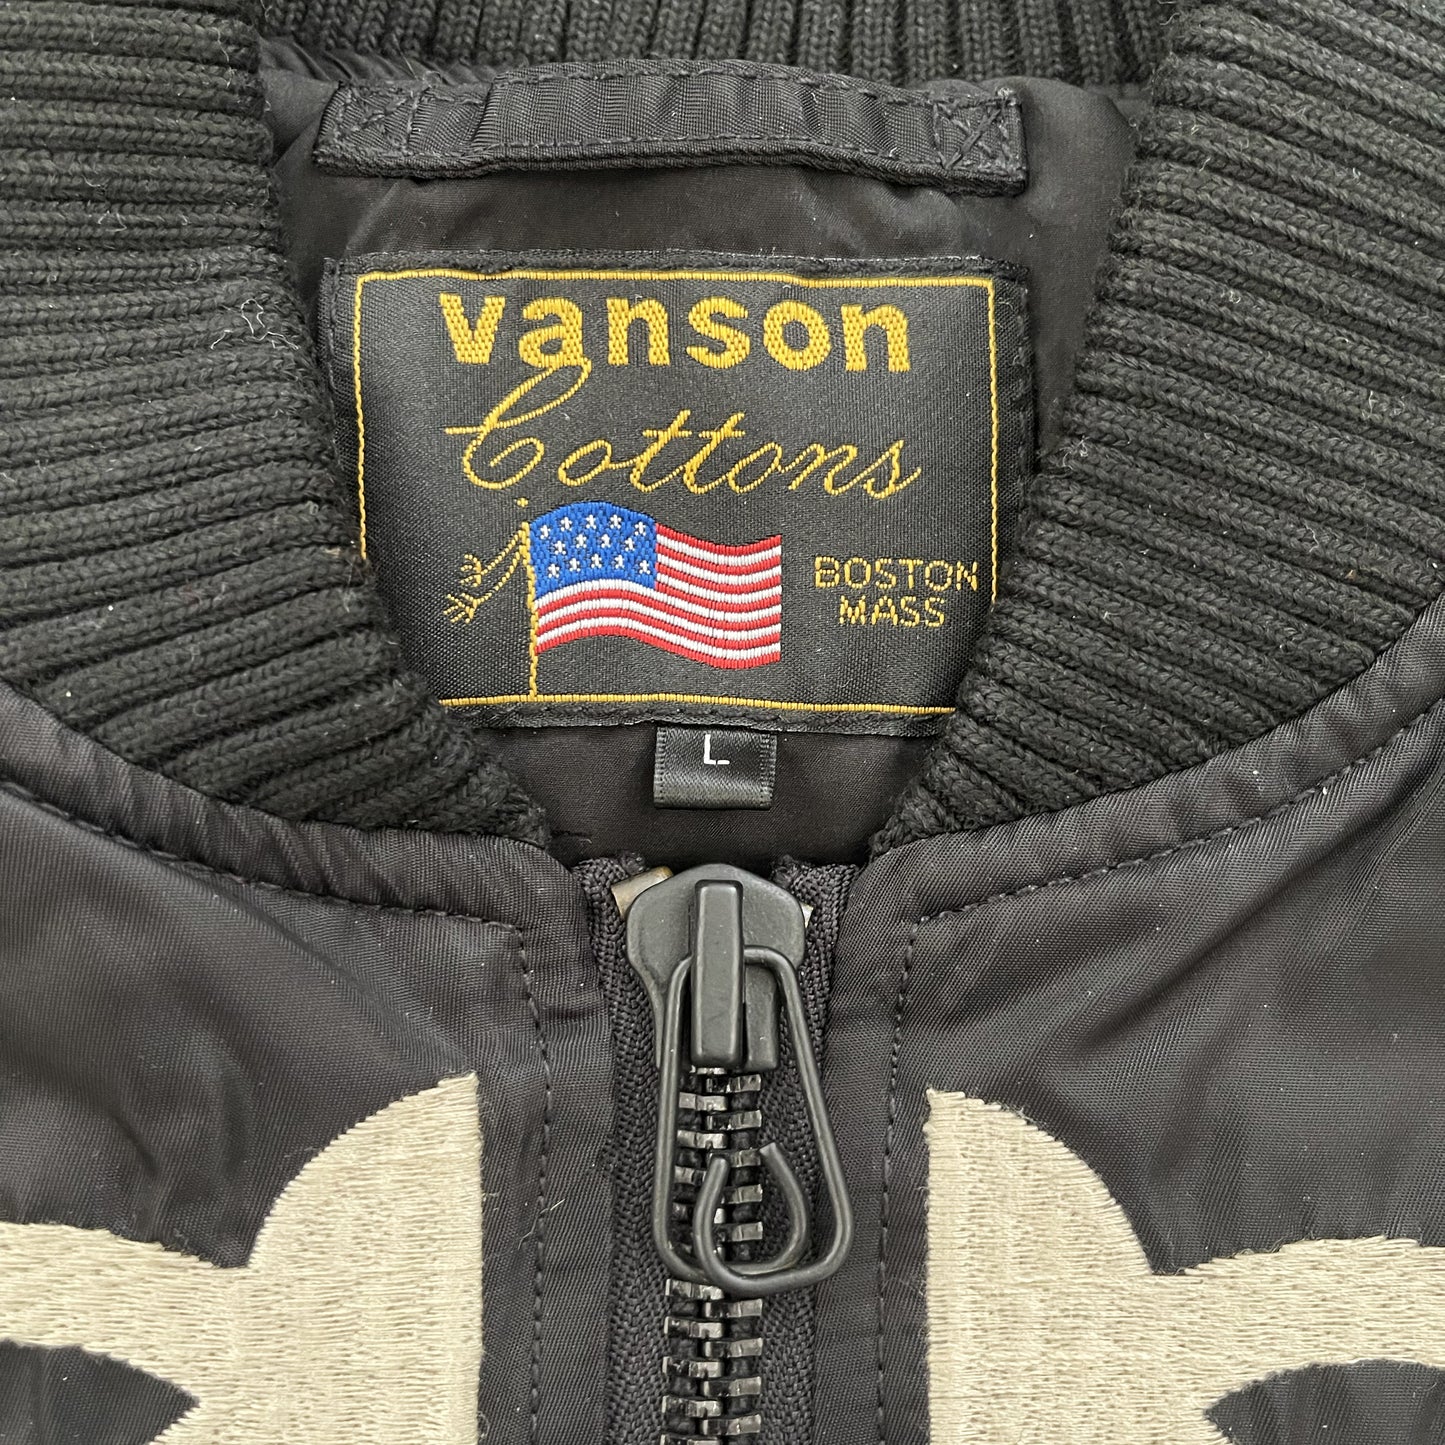 Vanson Leathers Skeleton Bomber Jacket